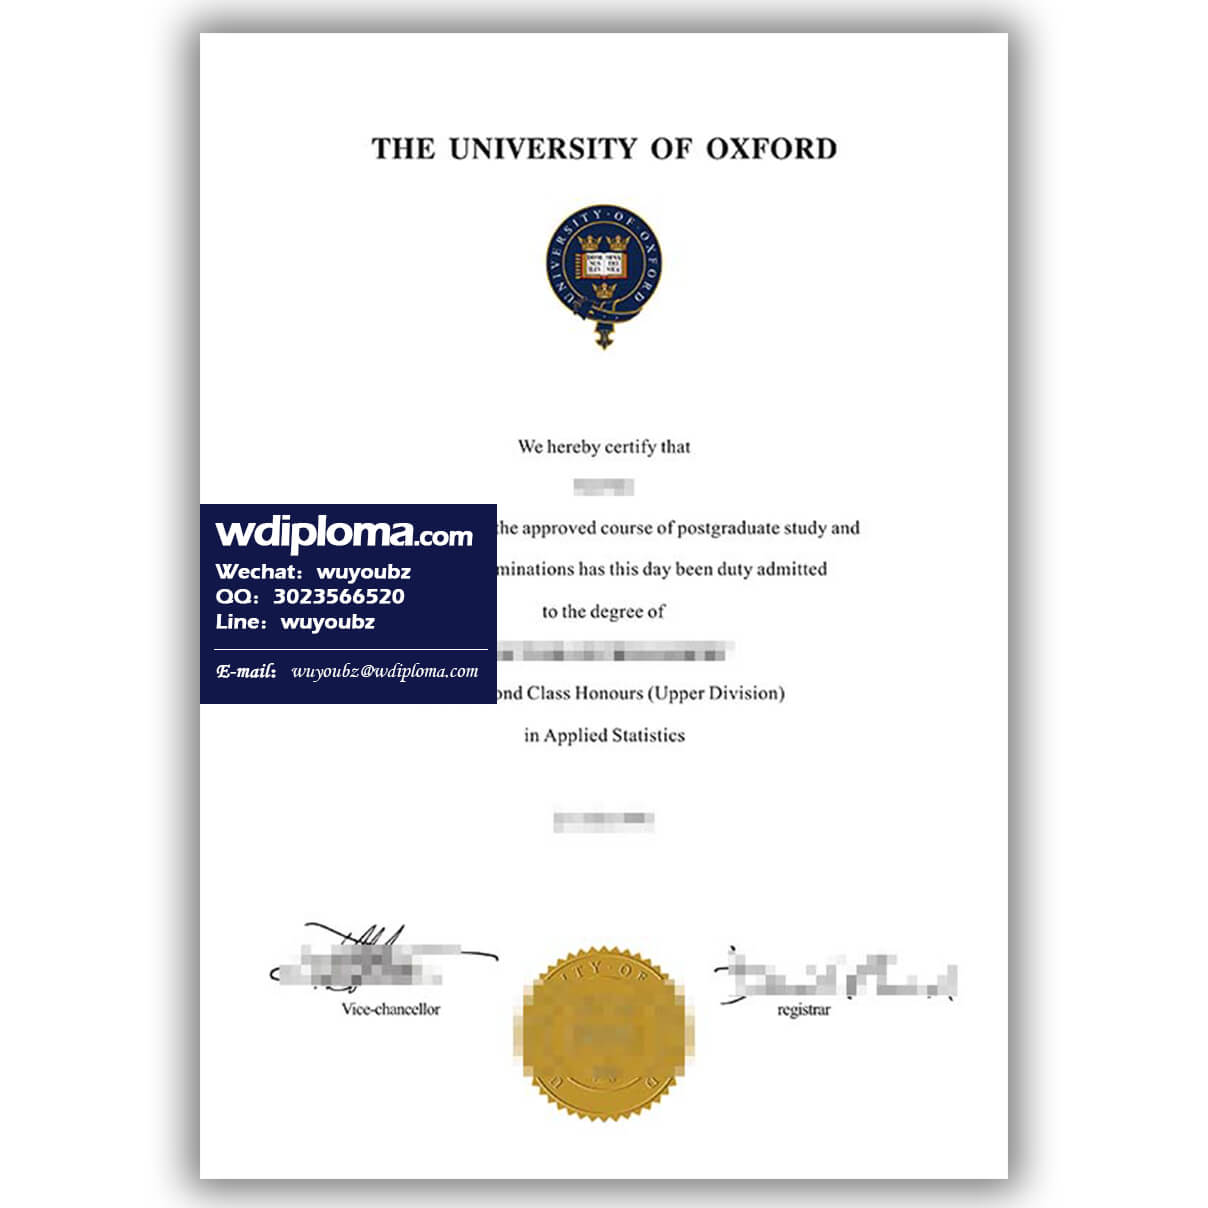 phd degree in oxford university